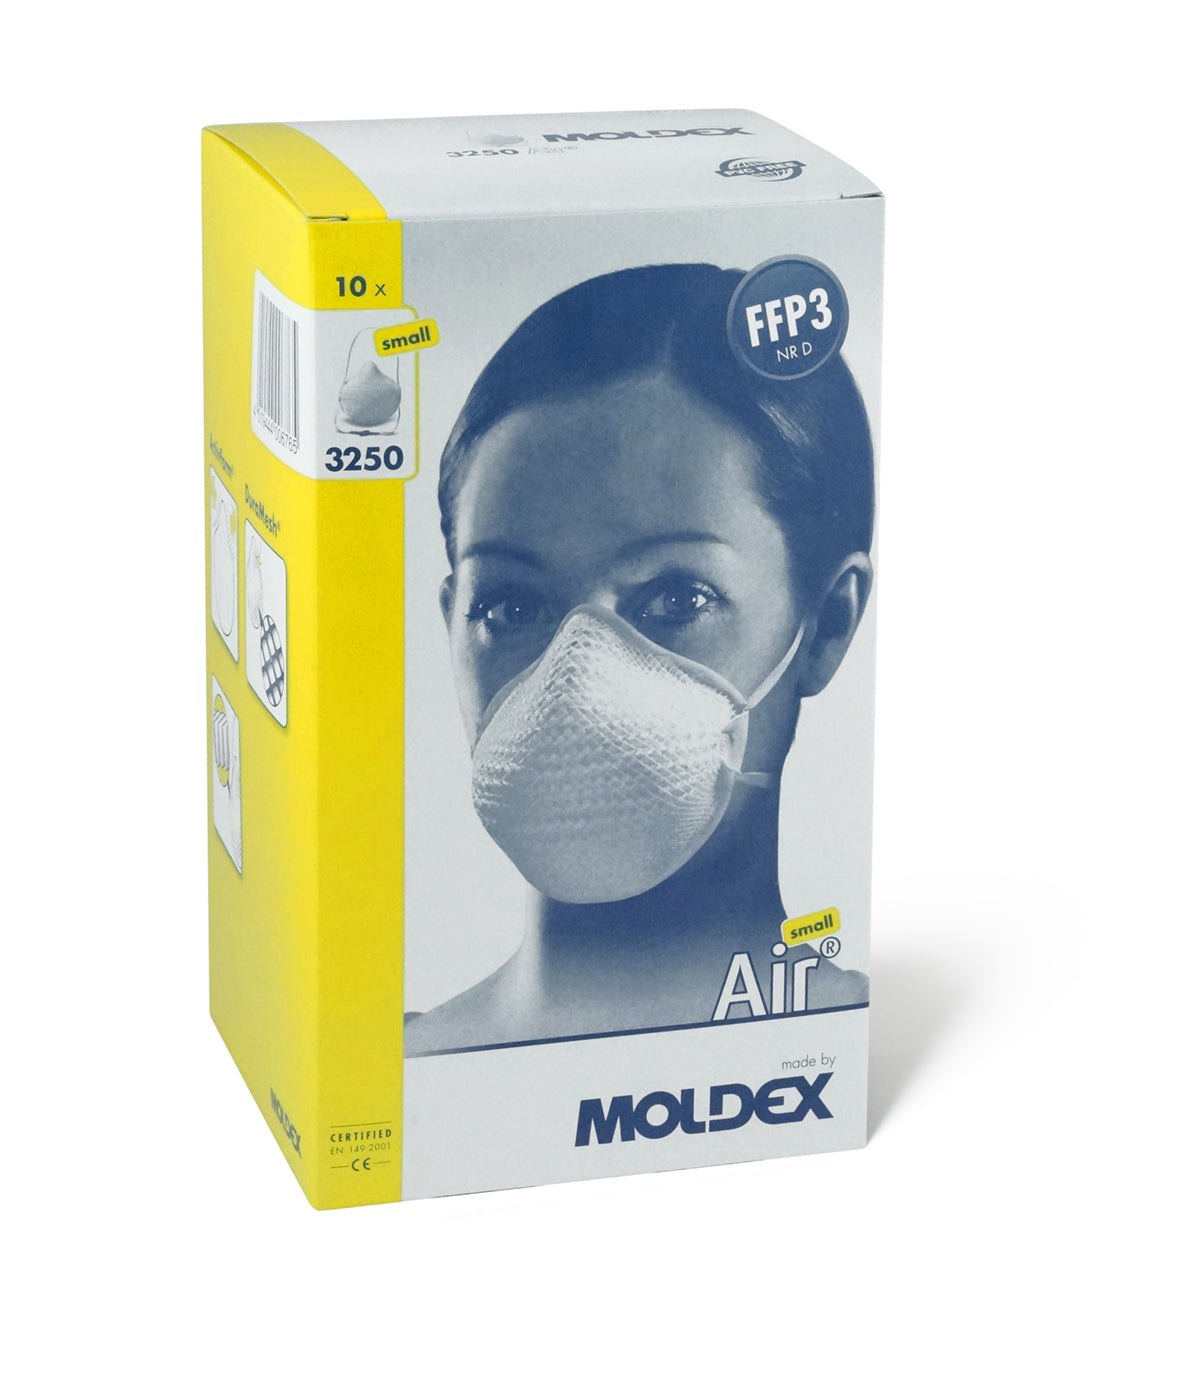 Moldex AIR FFP3 RD Non Valved size S/M (Box of 10) - DaltonSafety